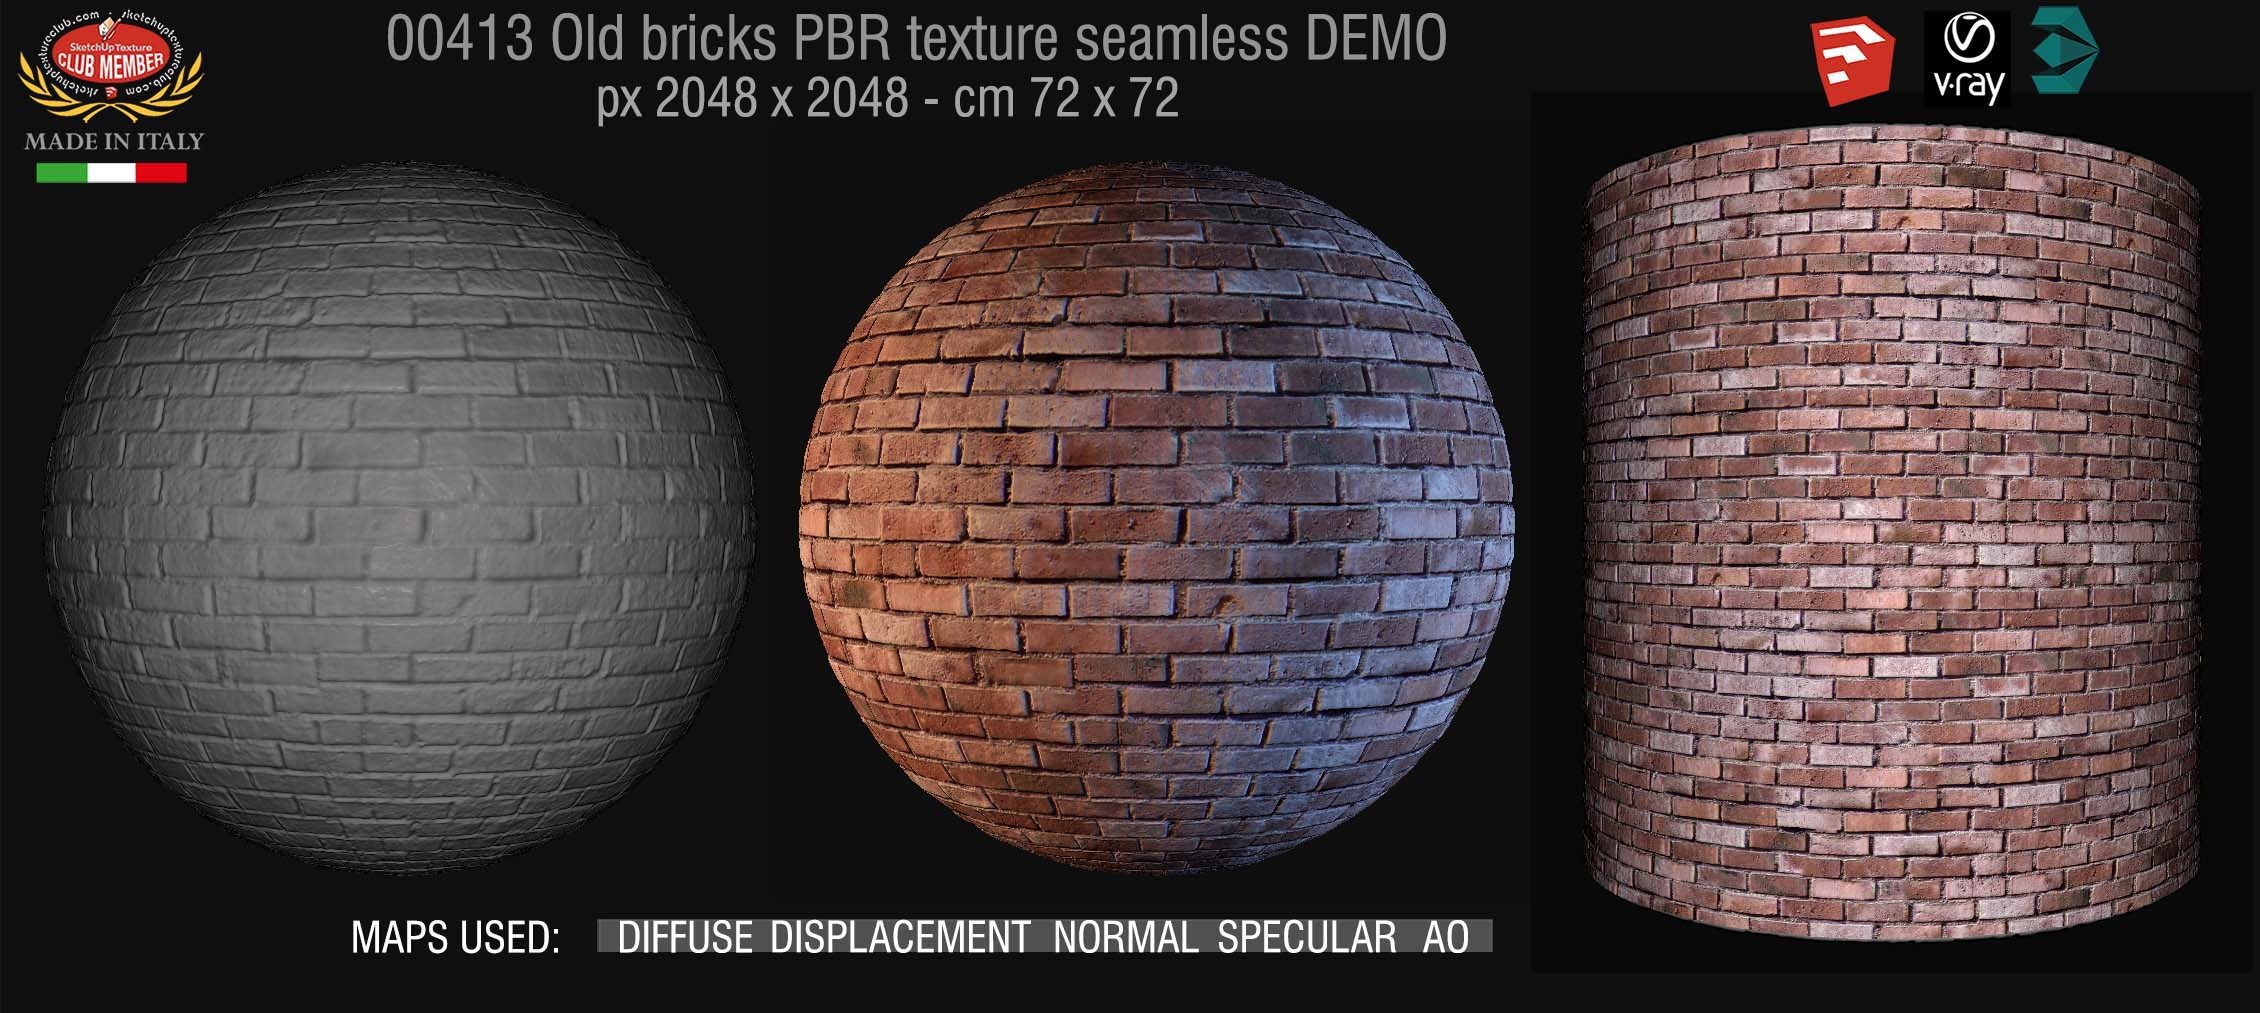 00413 Old bricks PBR texture seamless DEMO